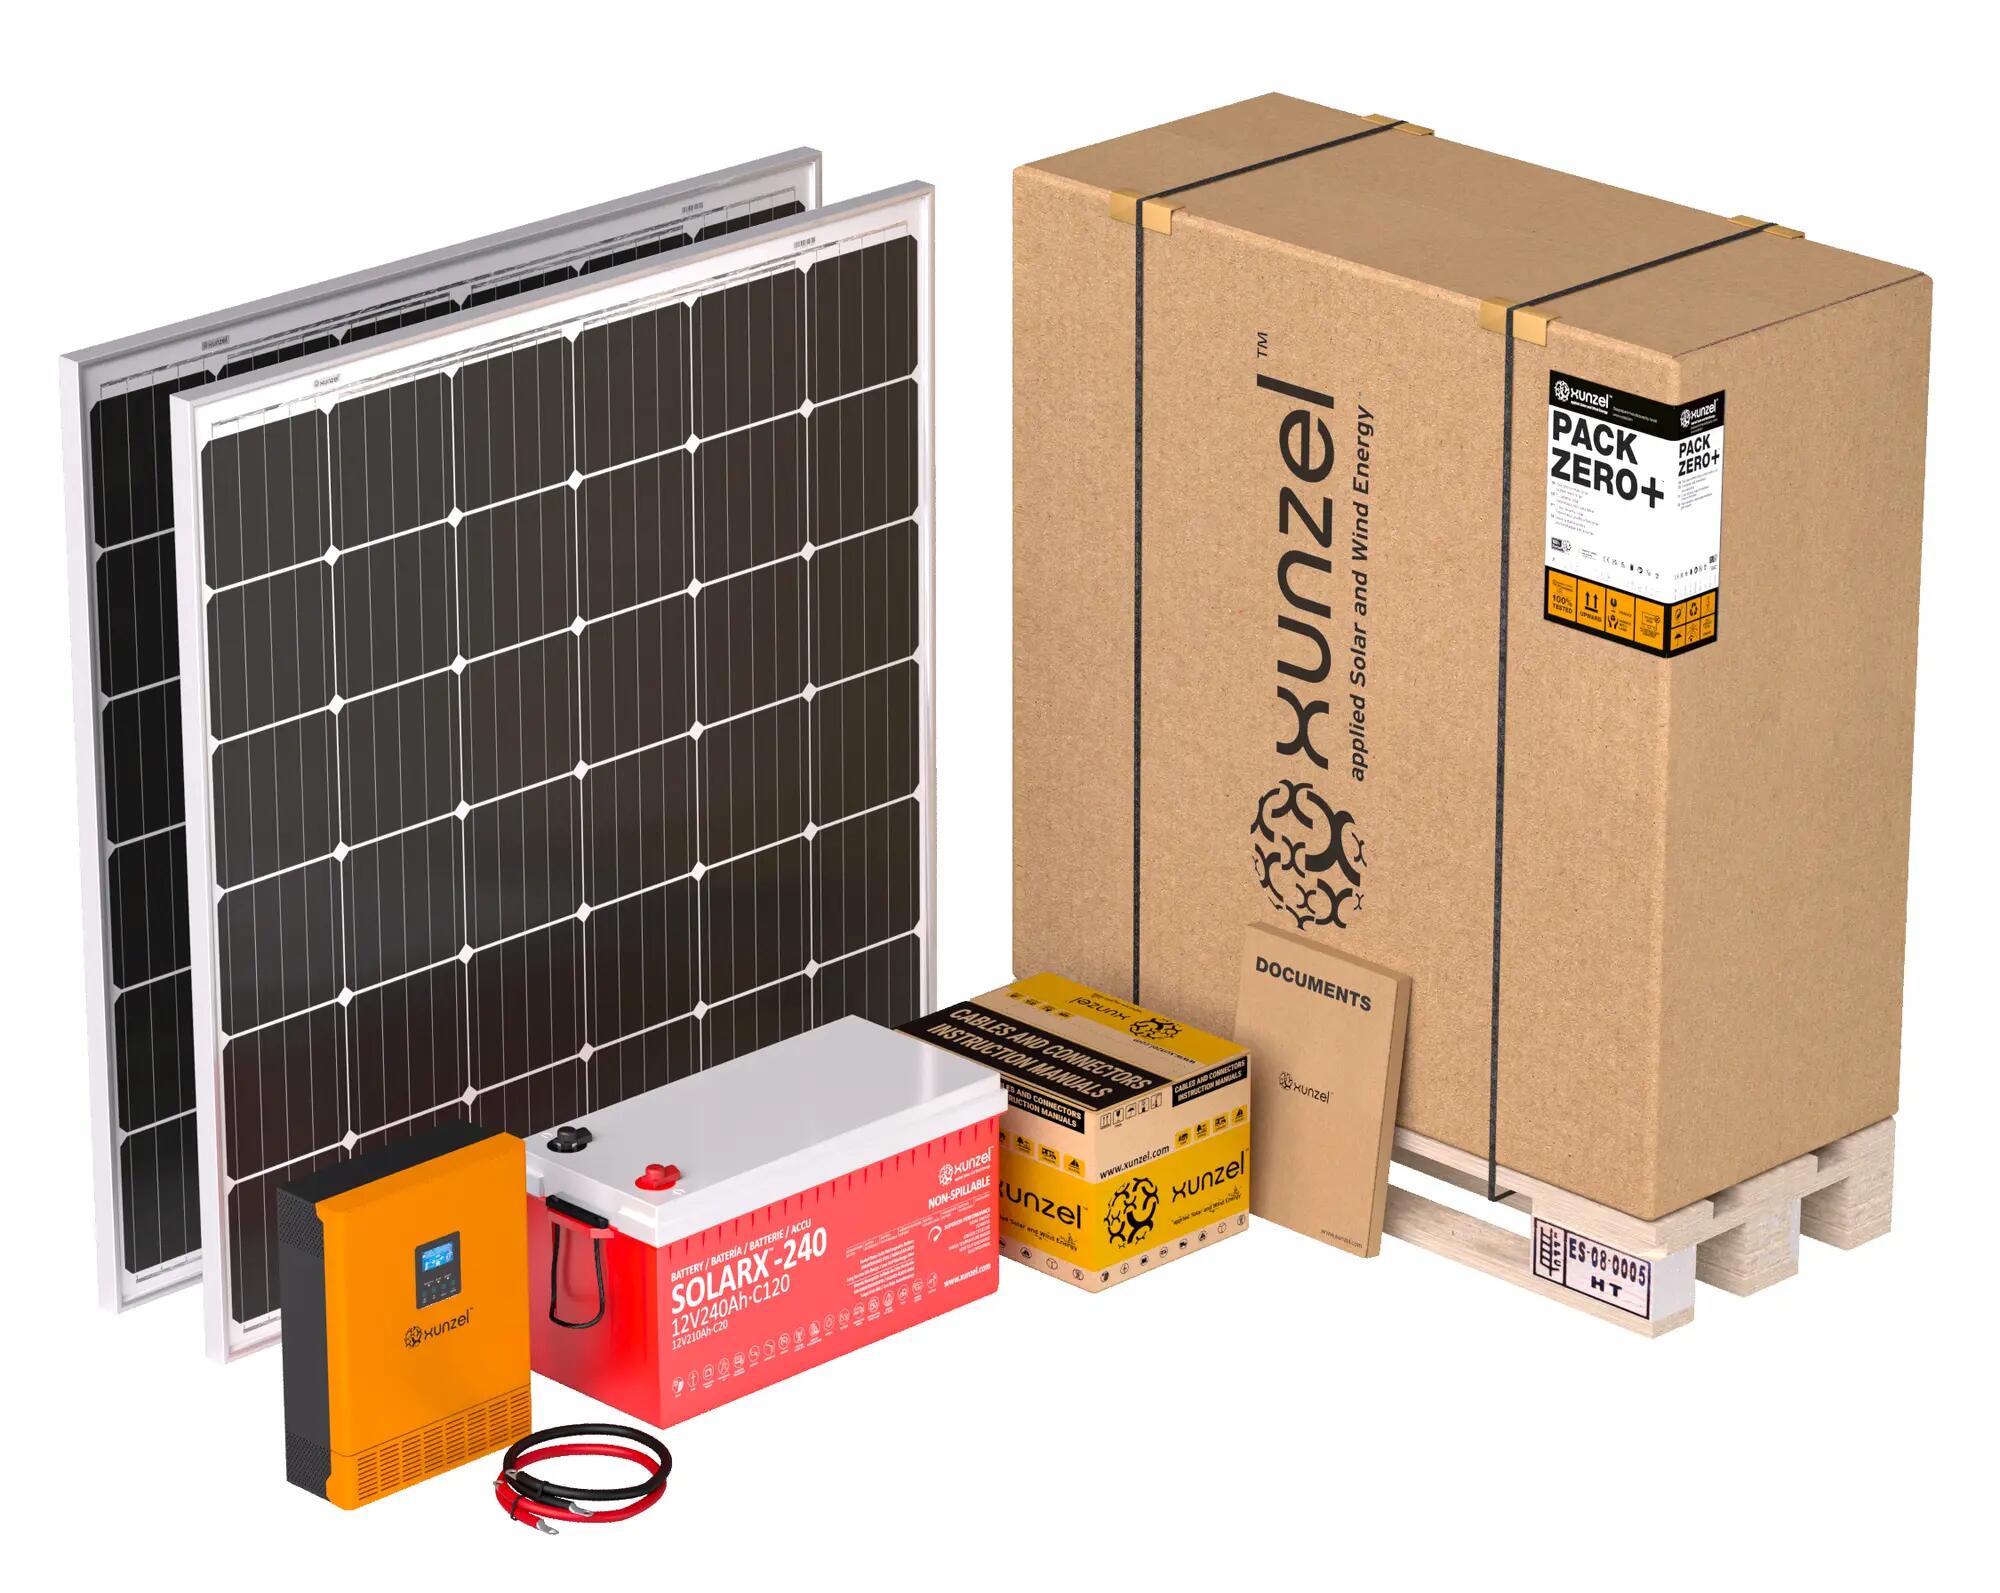 Kit solar pack zero+xunzel1090ixs hasta 1900wh/d, batería 2,8kwh, inversor 1kw